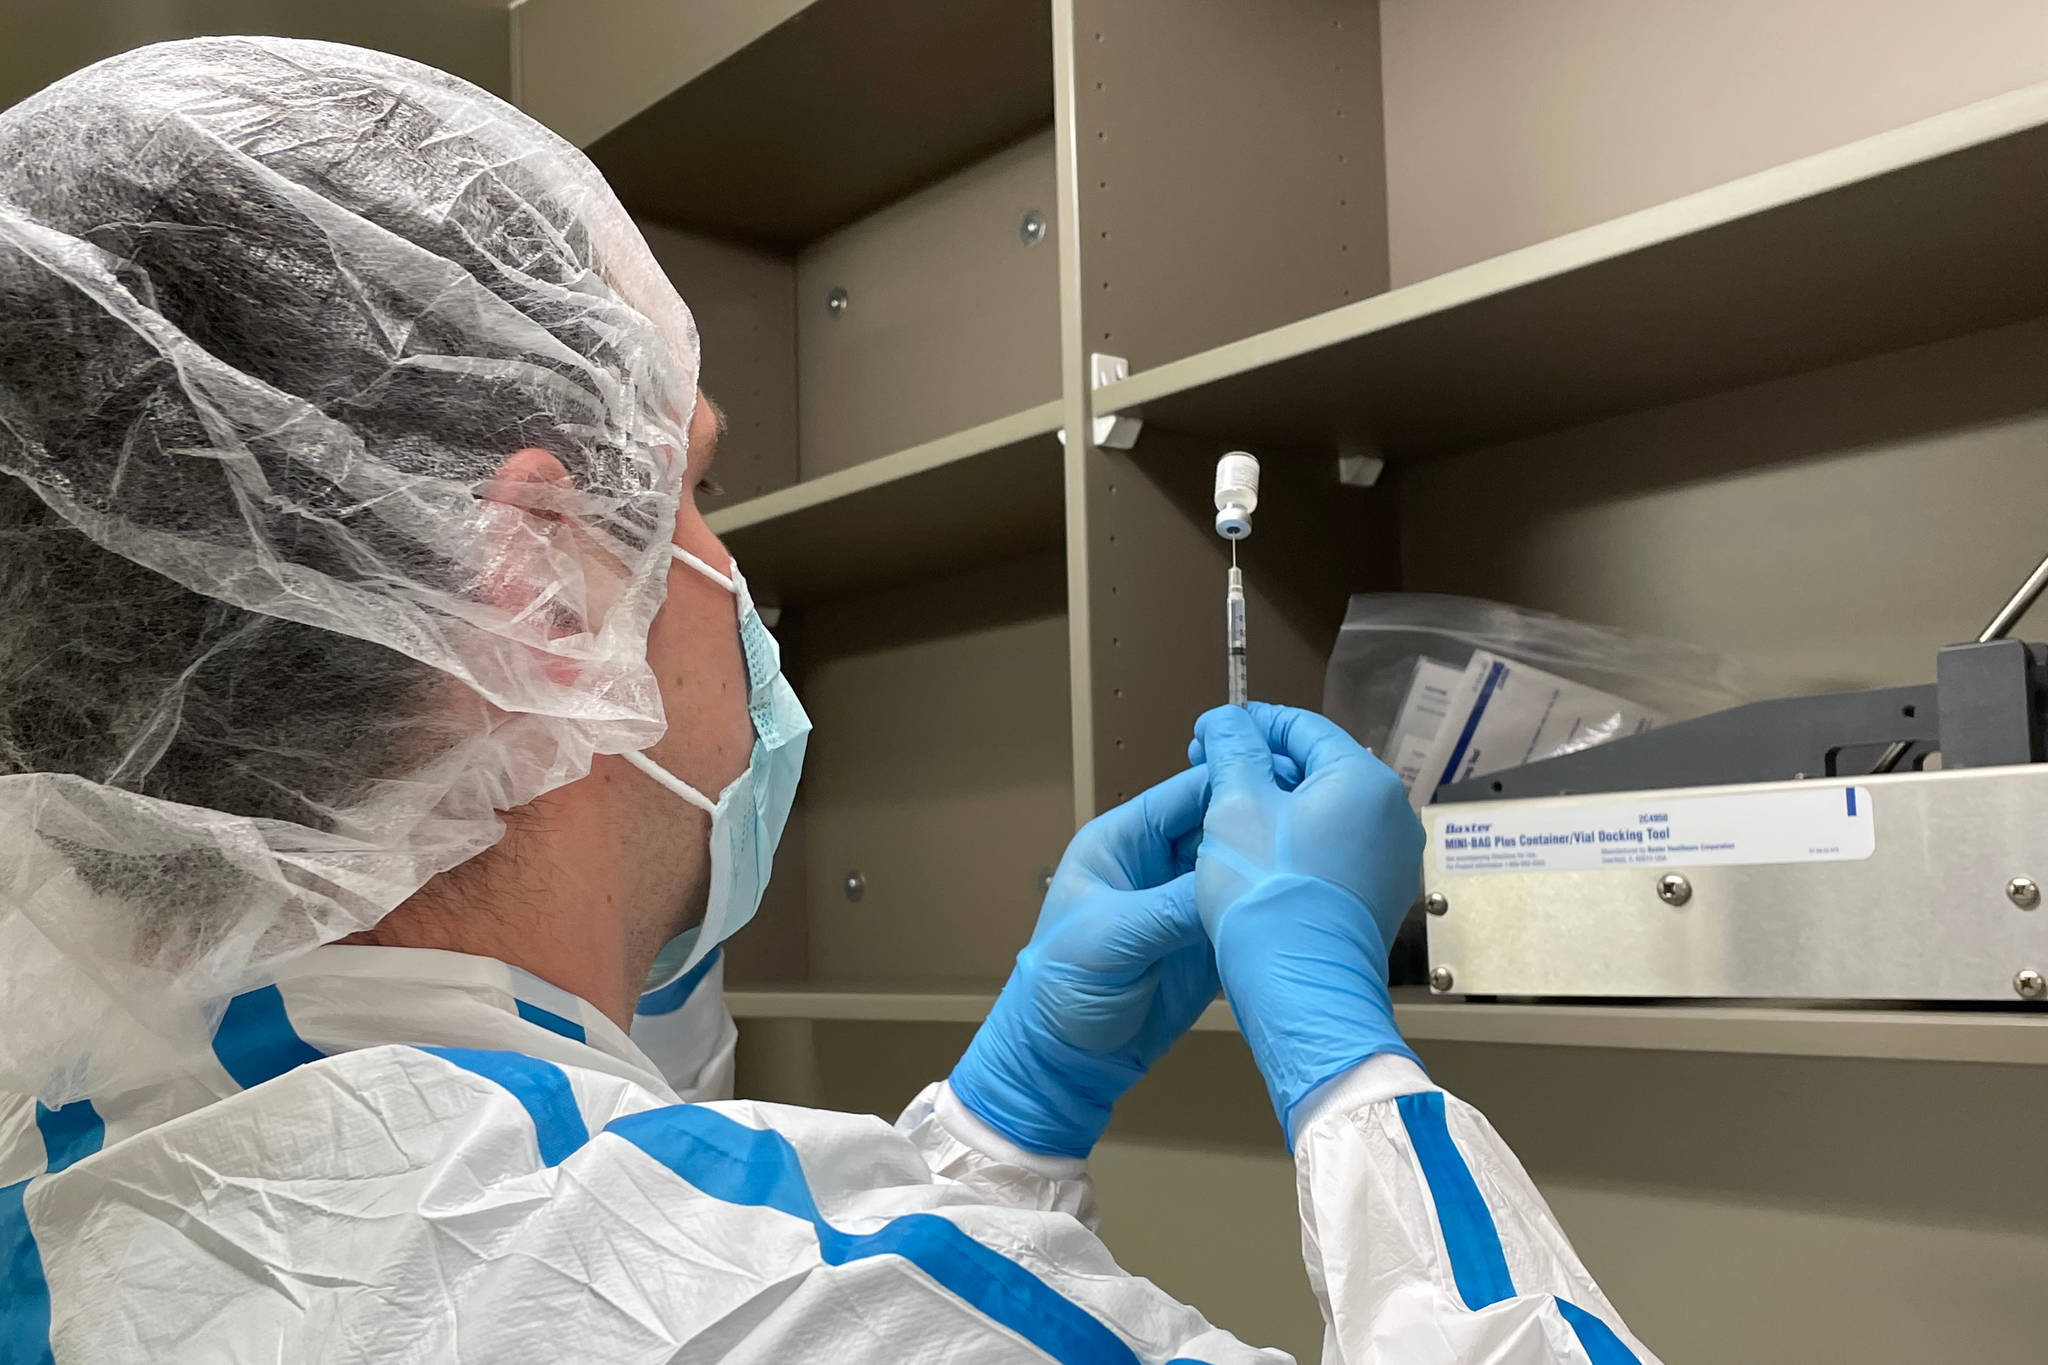 Krischelle Batac, a pharmacy technician with Bartlett Regional Hospital, prepares the first dose of the Pfizer/BioNTech coronavirus vaccine on Dec. 15, 2020. (Courtesy photo / Katie Bausler)